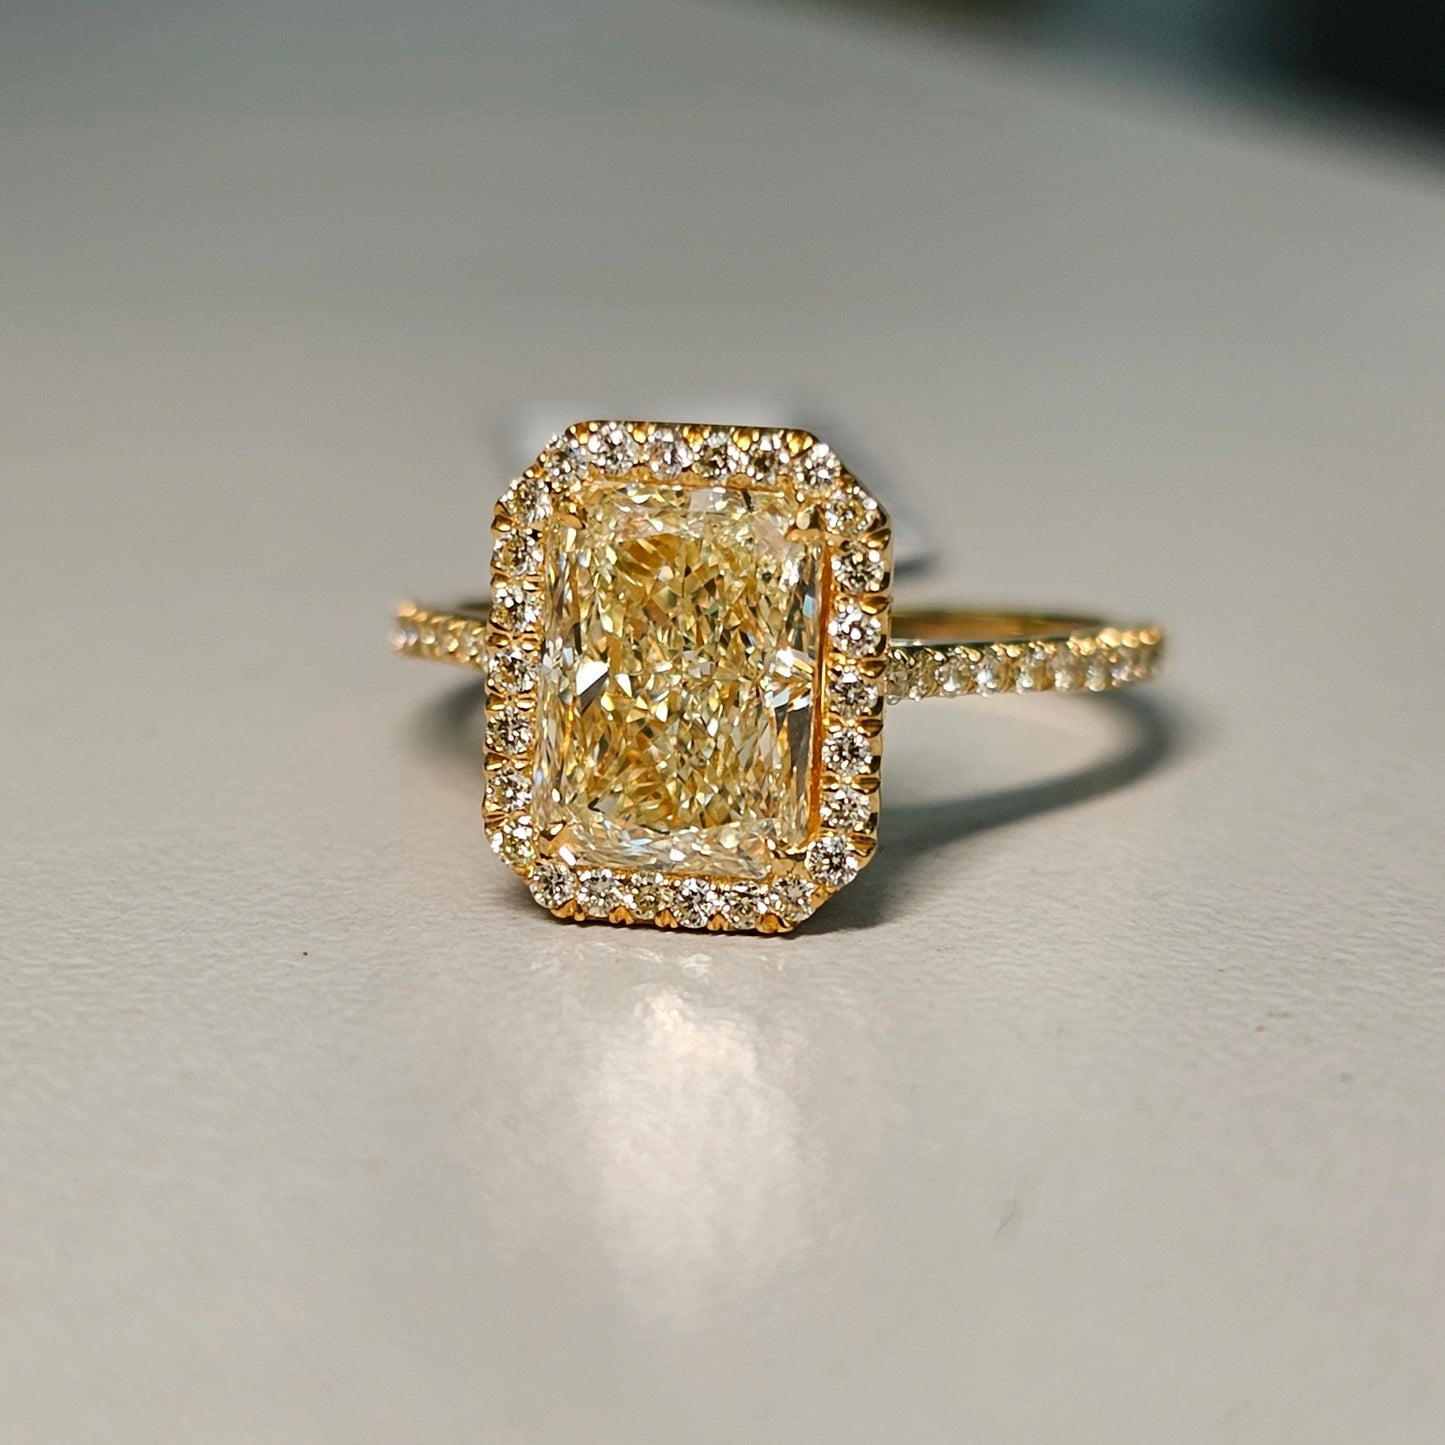 2 carat yellow diamond ring. Yellow diamond ring GIA certified. Yellow diamond jewelry.